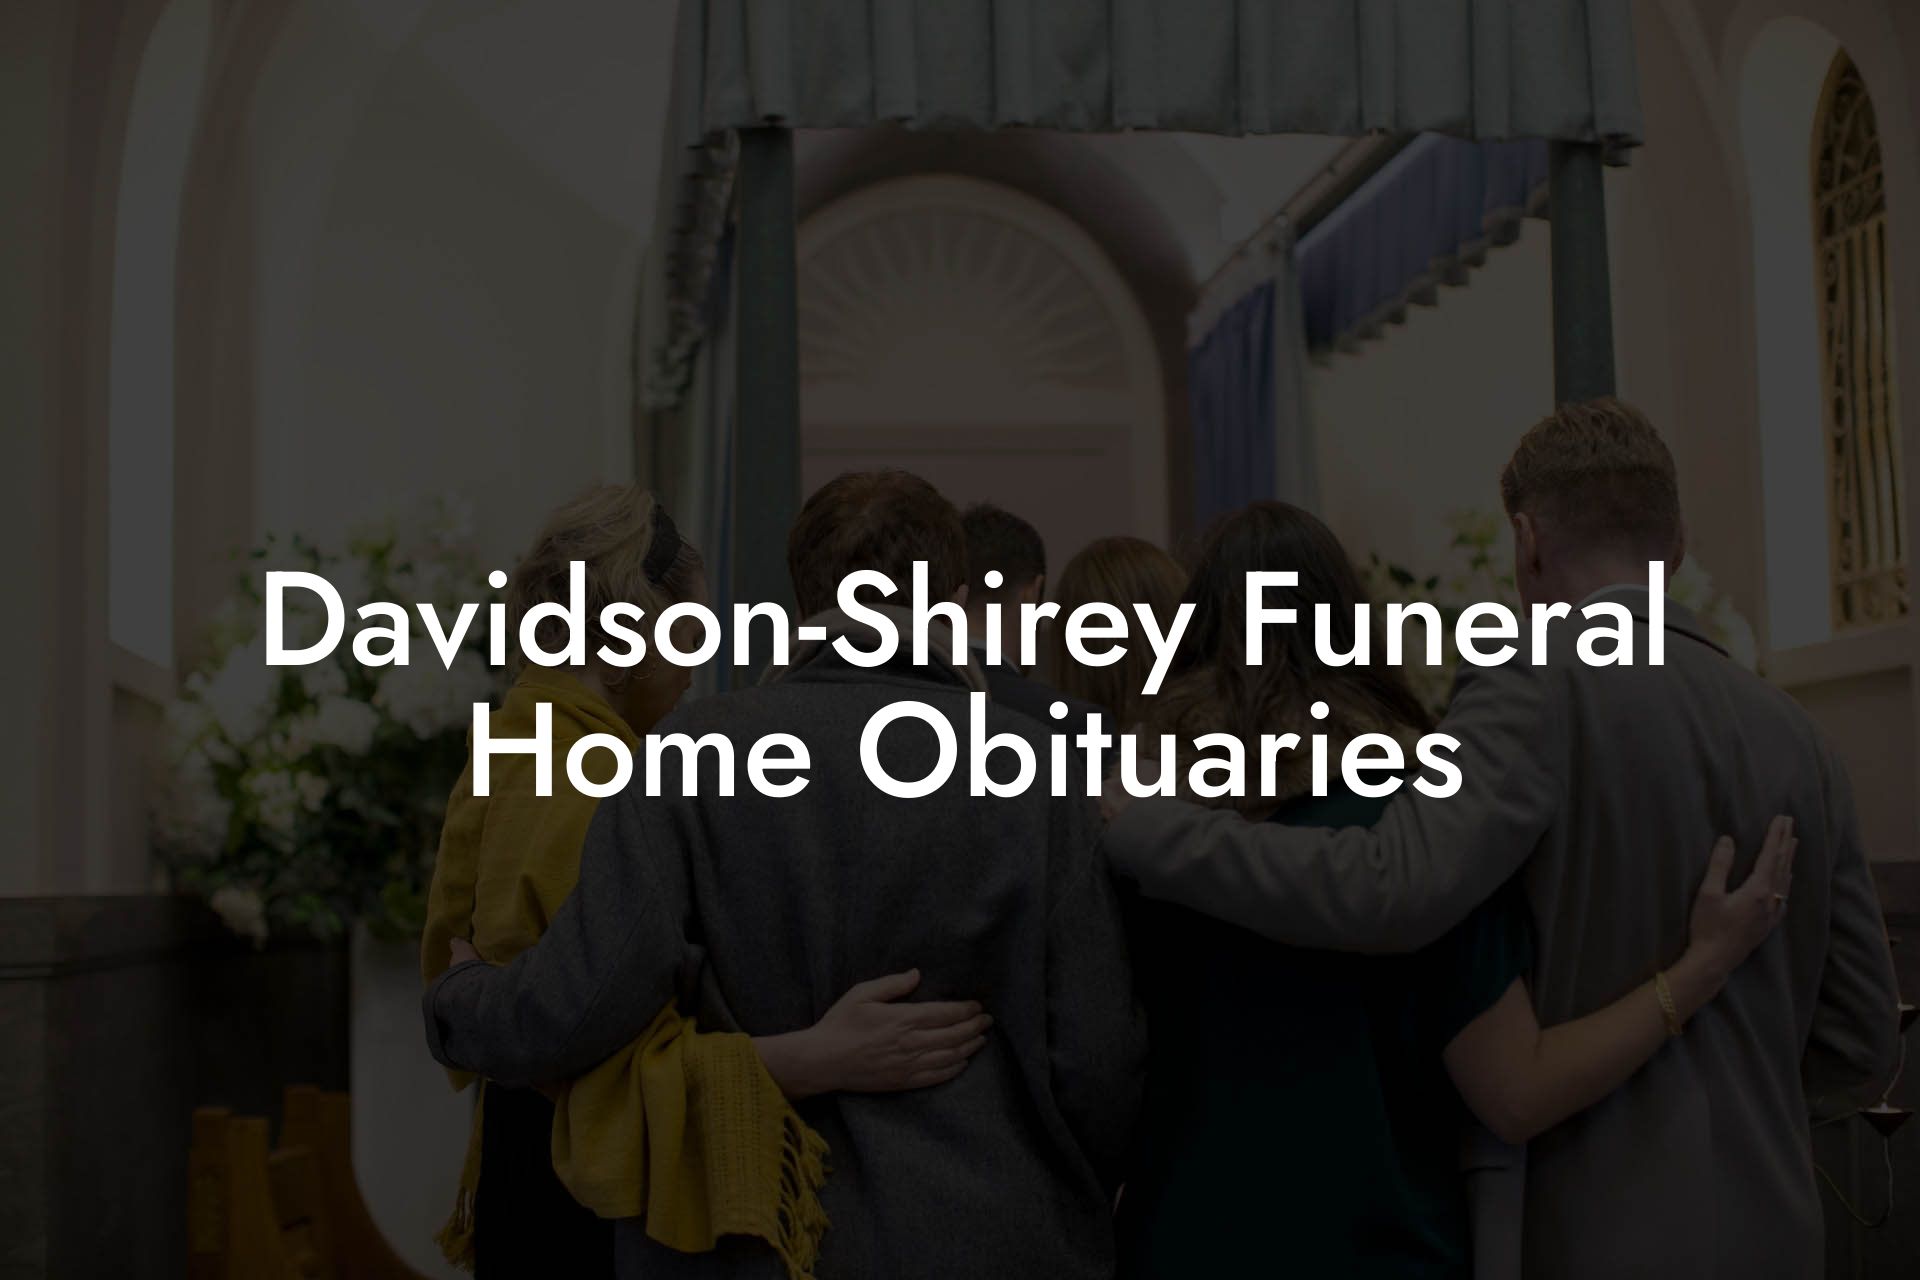 Davidson-Shirey Funeral Home Obituaries